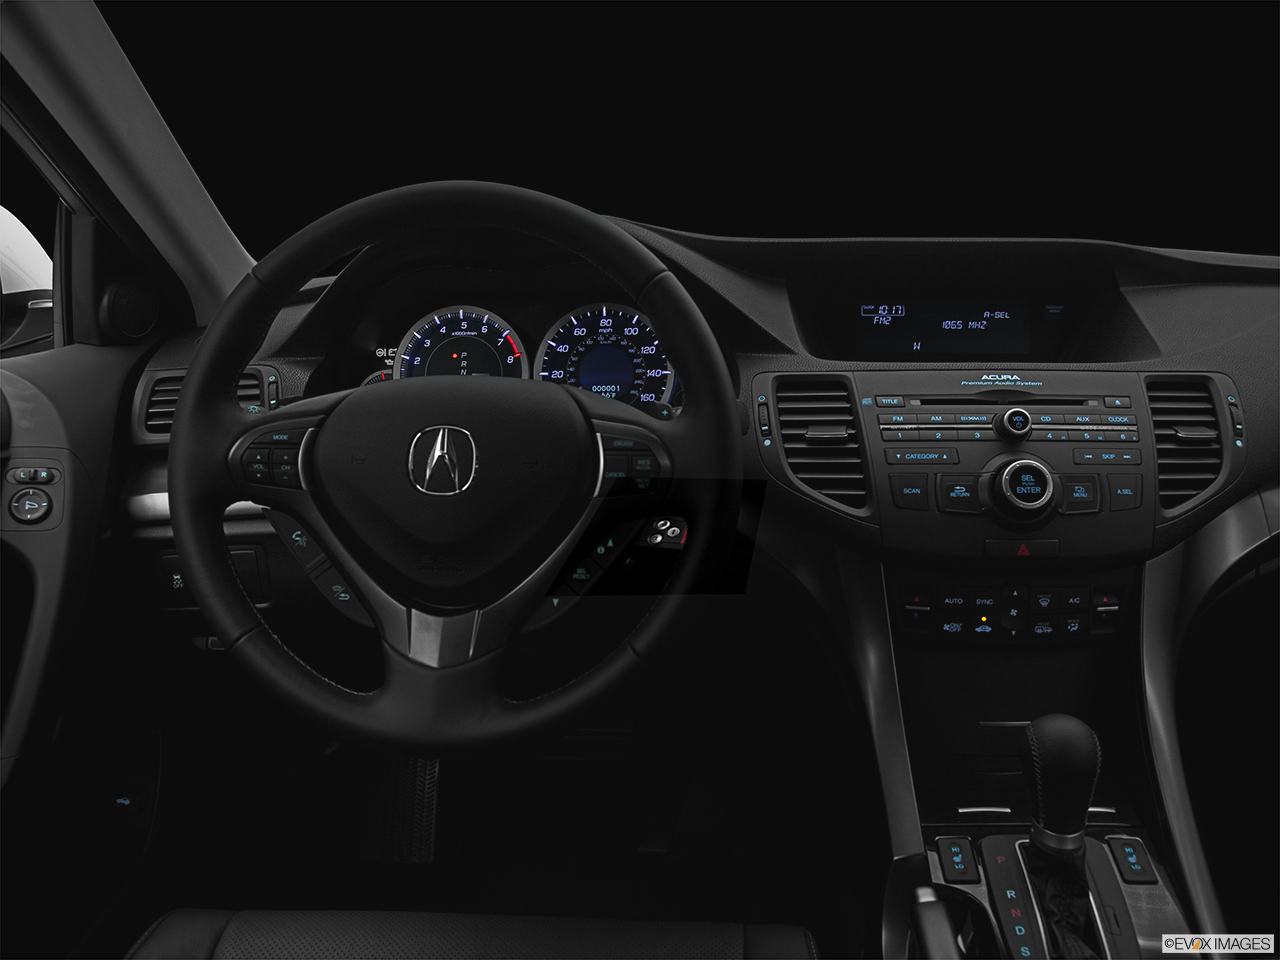 2011 Acura TSX TSX 5-speed Automatic Centered wide dash shot - "night" shot. 